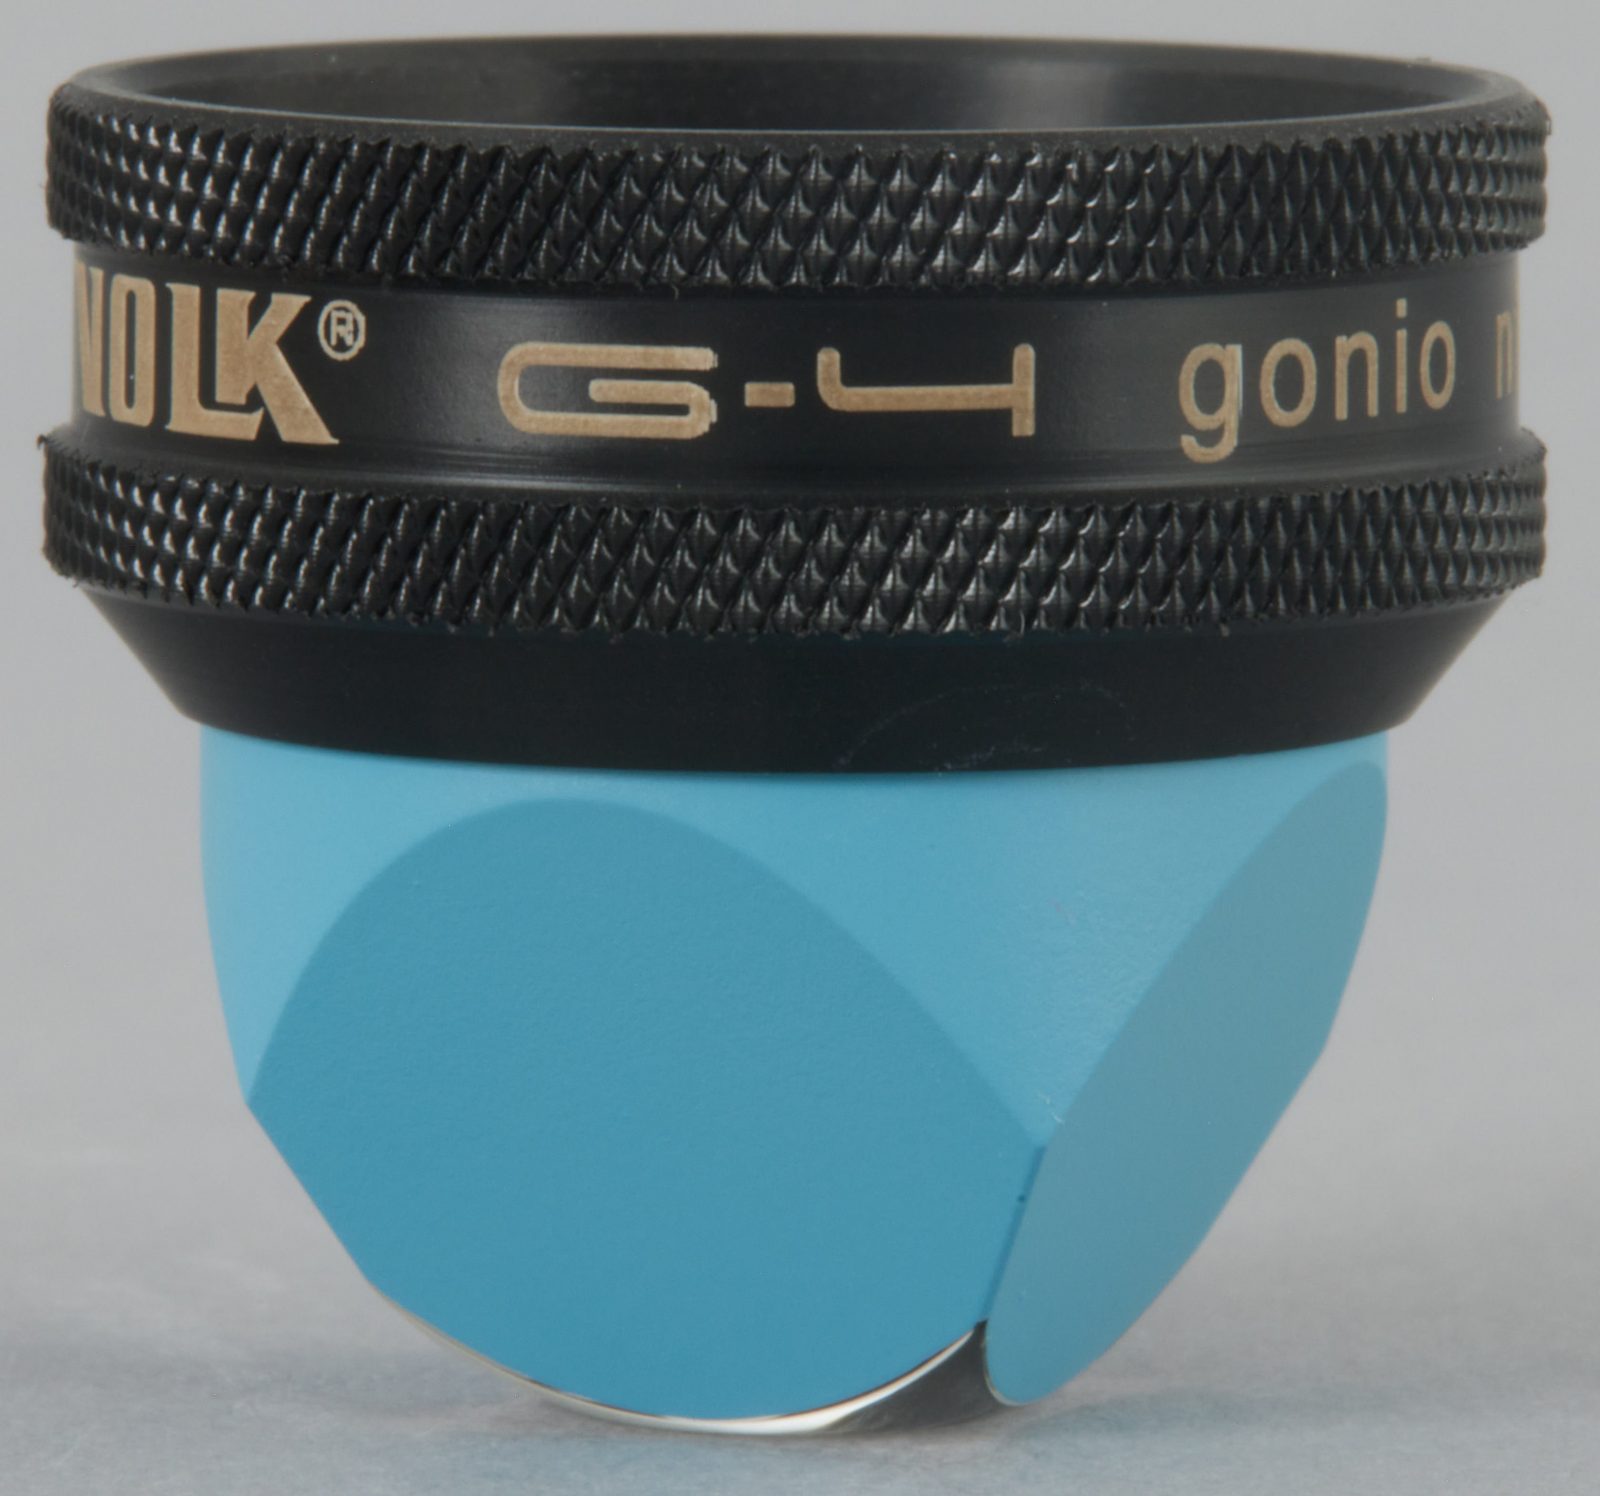 G-6 Gonio